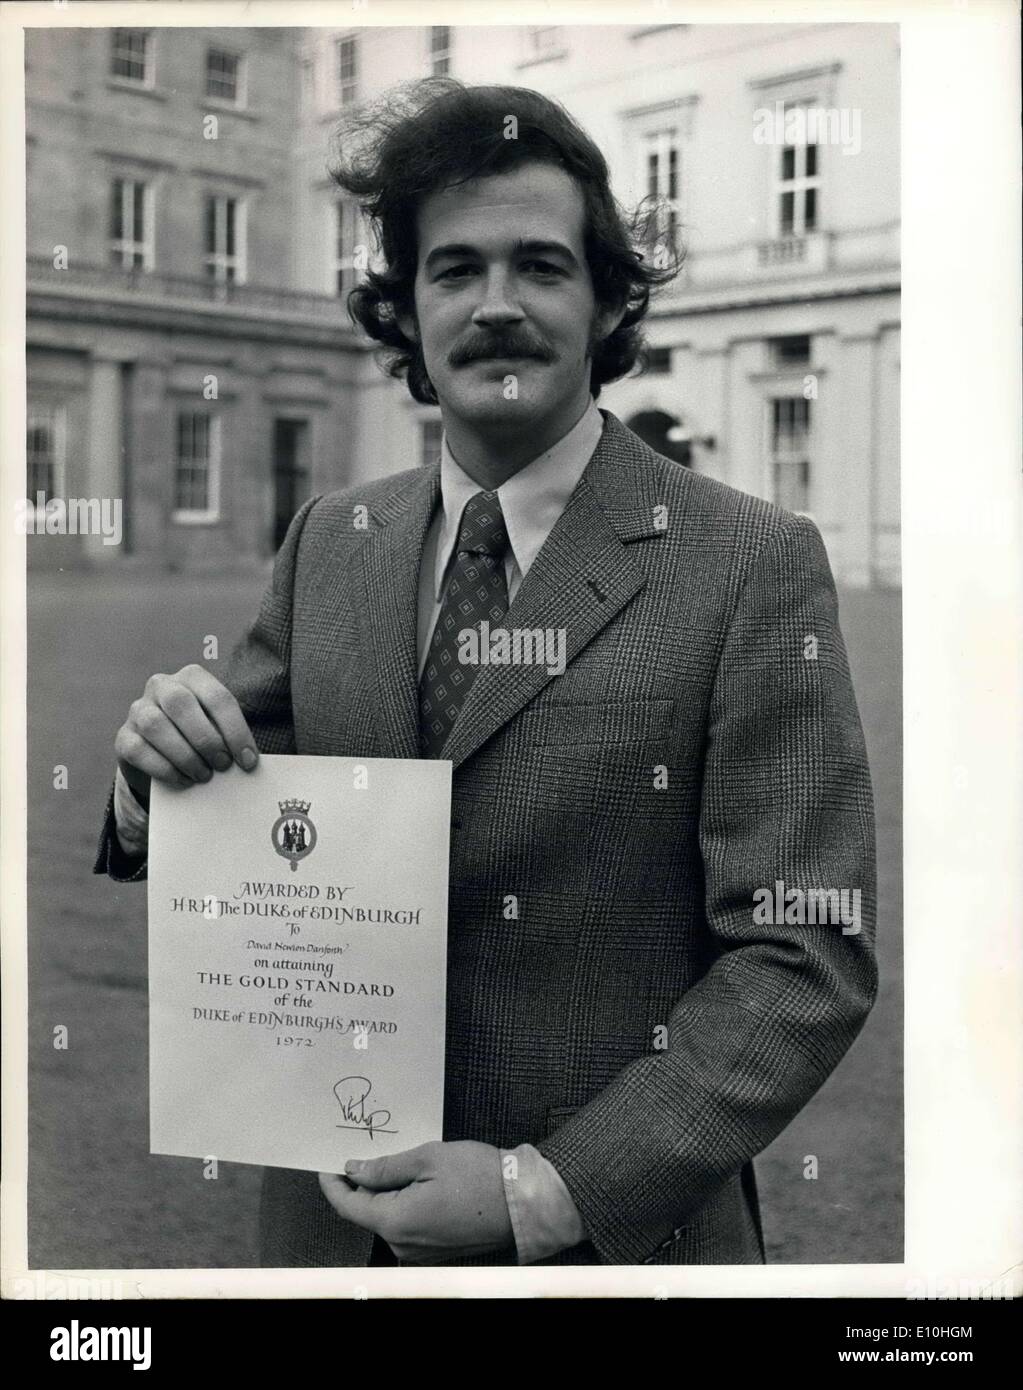 Nov. 23, 1972 - London - American student David Newlon Danforth of Wellesley Hills Mass. USA seen outside Buckingham Palace 11/23 after receiving the Duke of Edinburgh Award from the Duke. Stock Photo